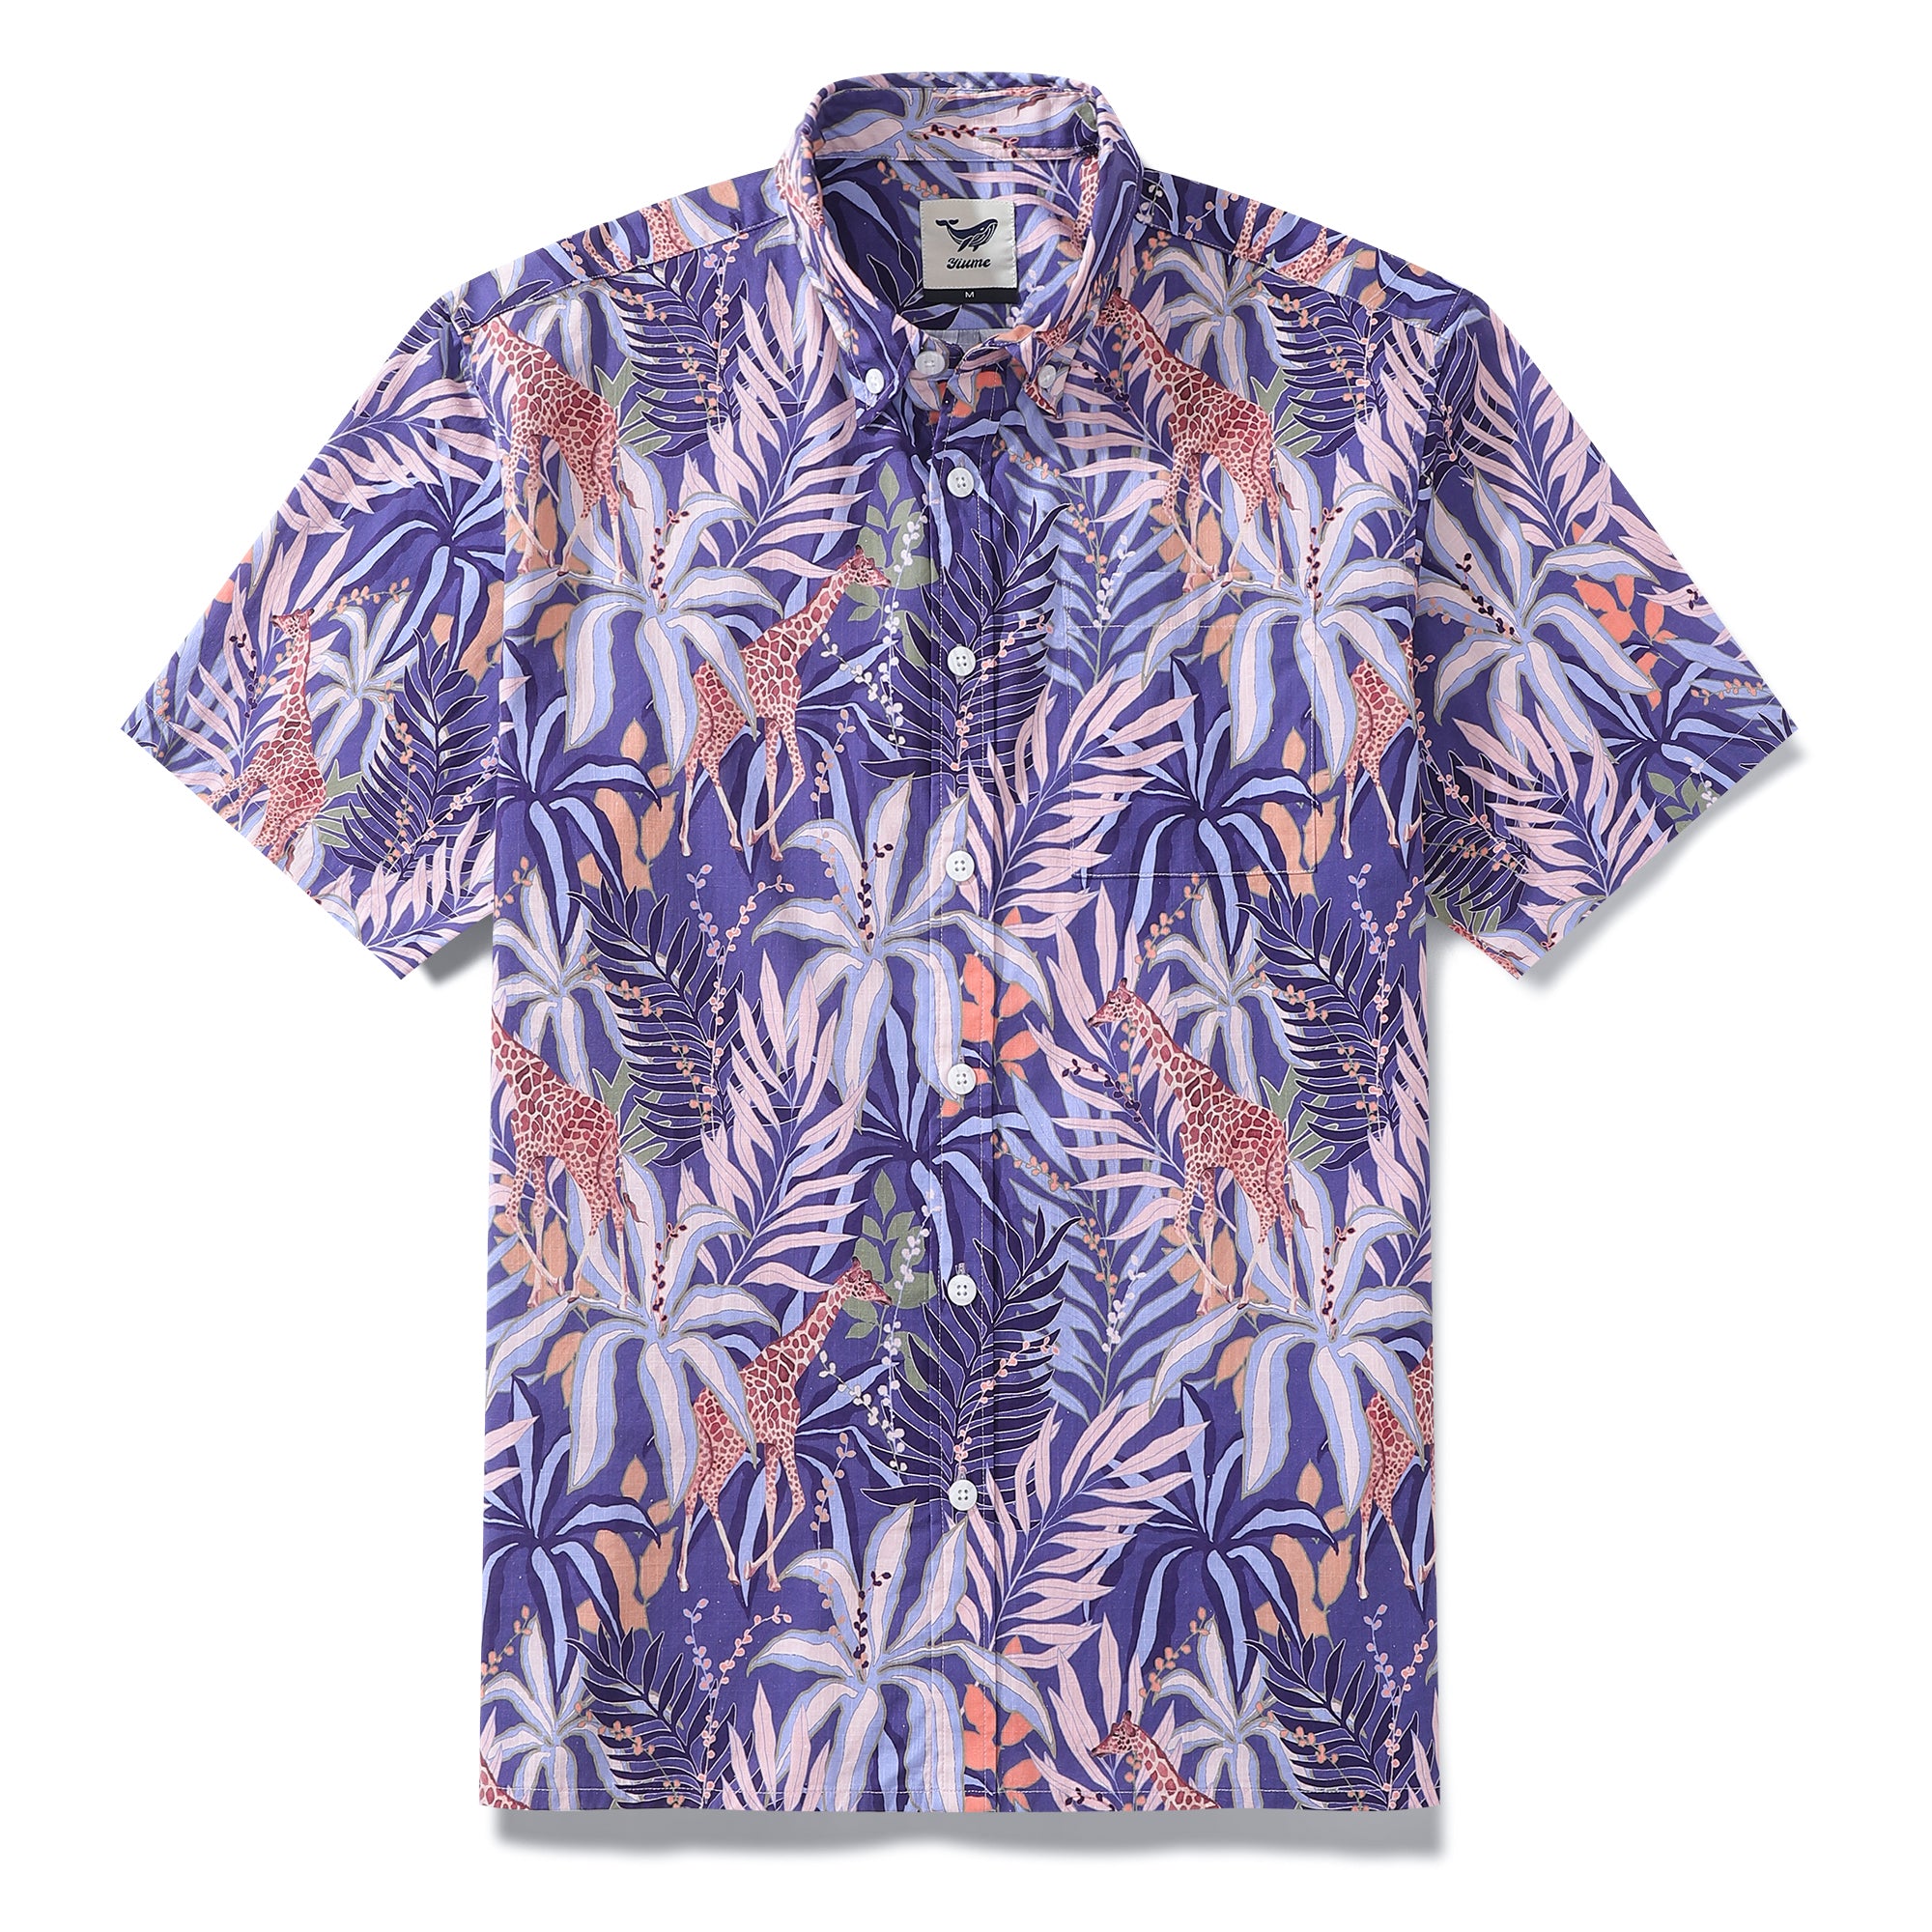 1930s Vinatge Hawaiian Shirt For Men Cotton Button-down Short Sleeve Giraffes Aloha Shirt